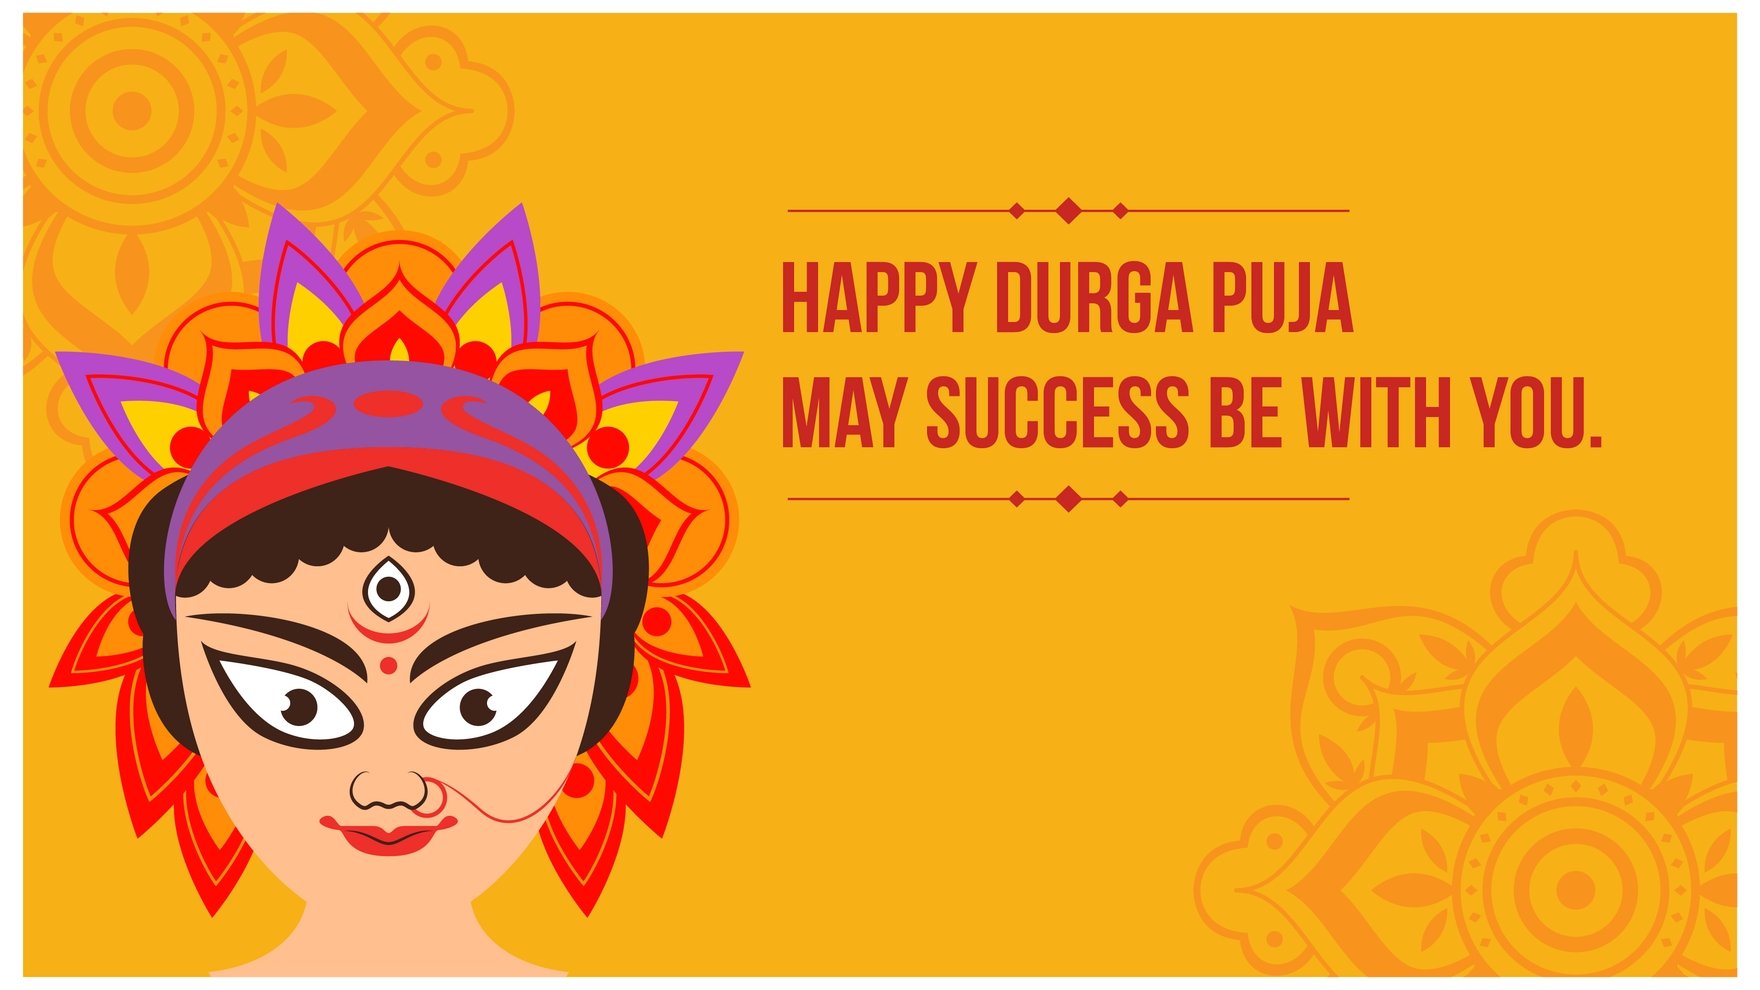 Durga Puja Greeting Card Background in PDF, Illustrator, PSD, EPS, SVG, JPG, PNG